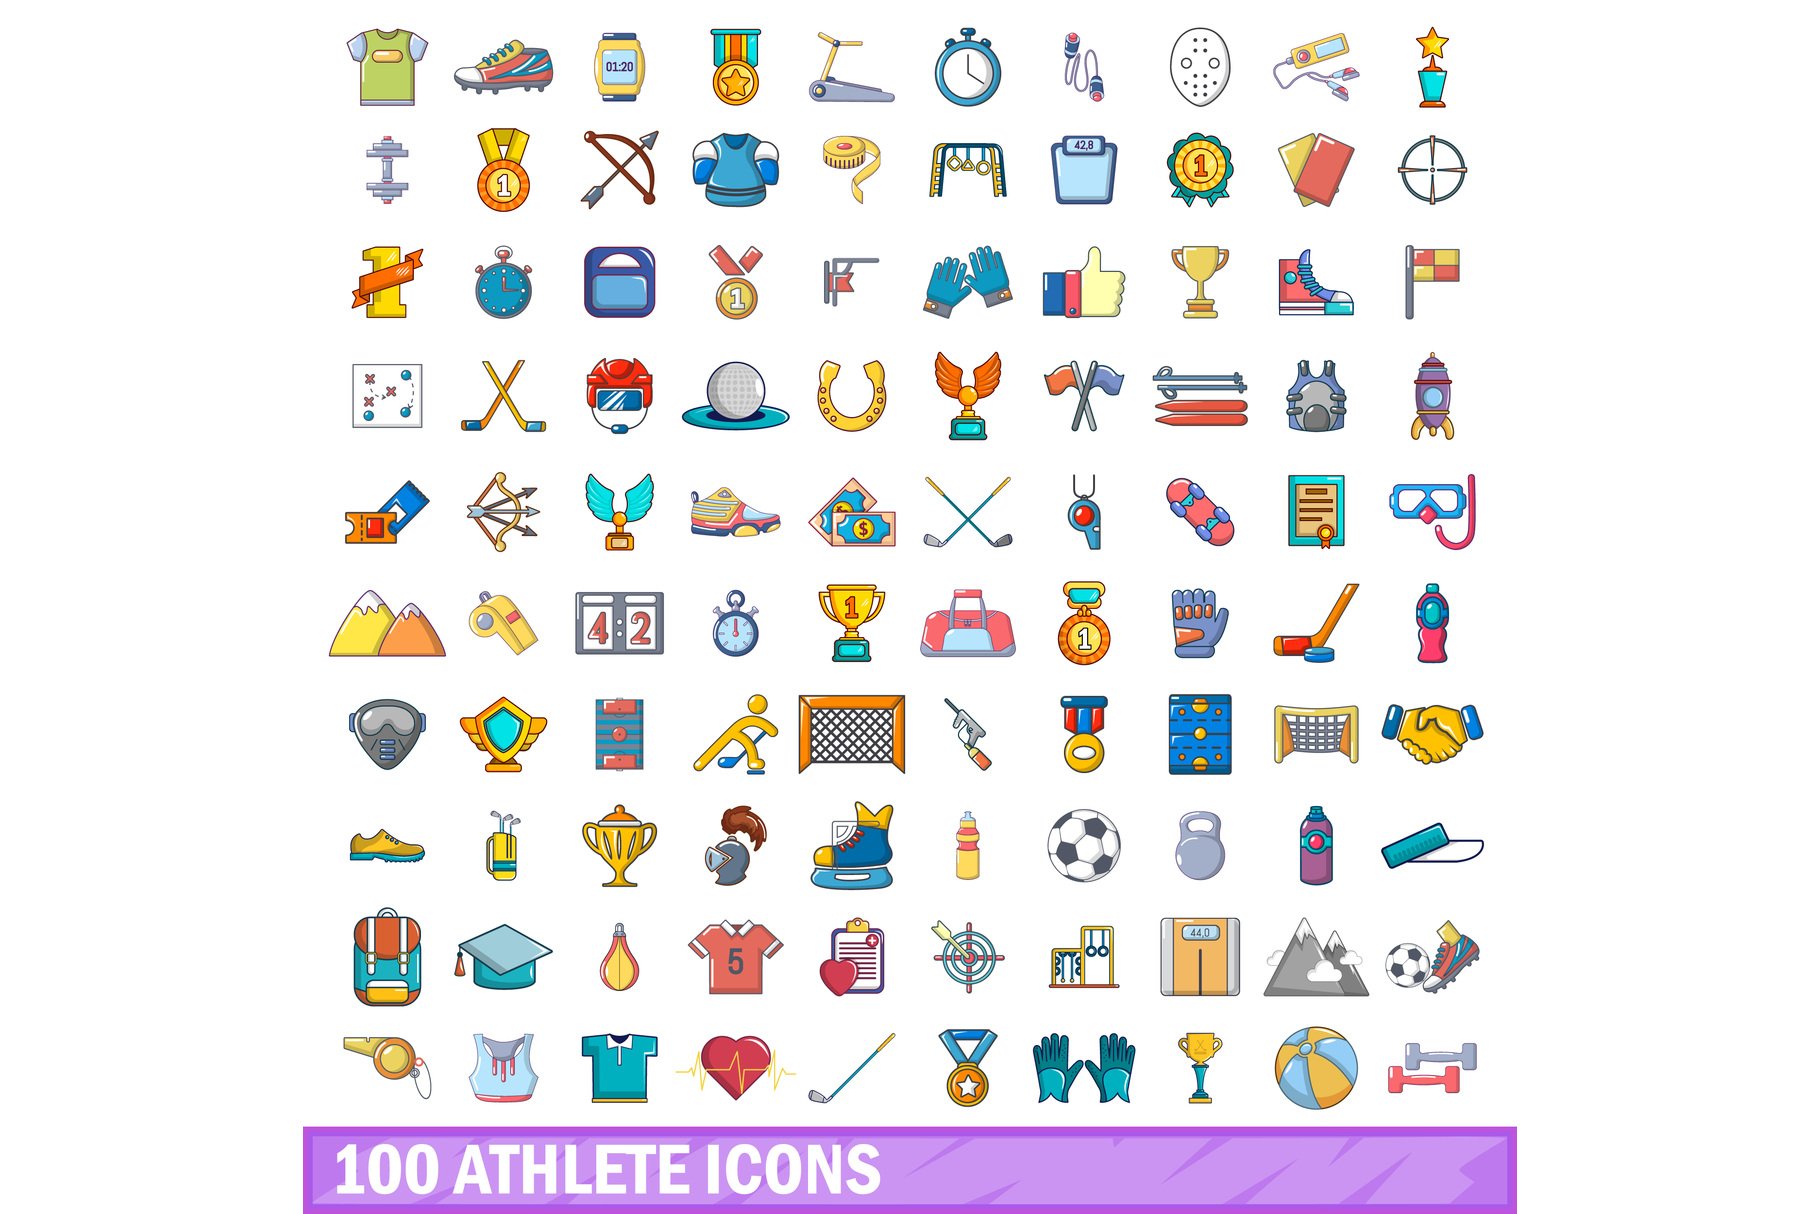 100 athlete icons set, cartoon style cover image.